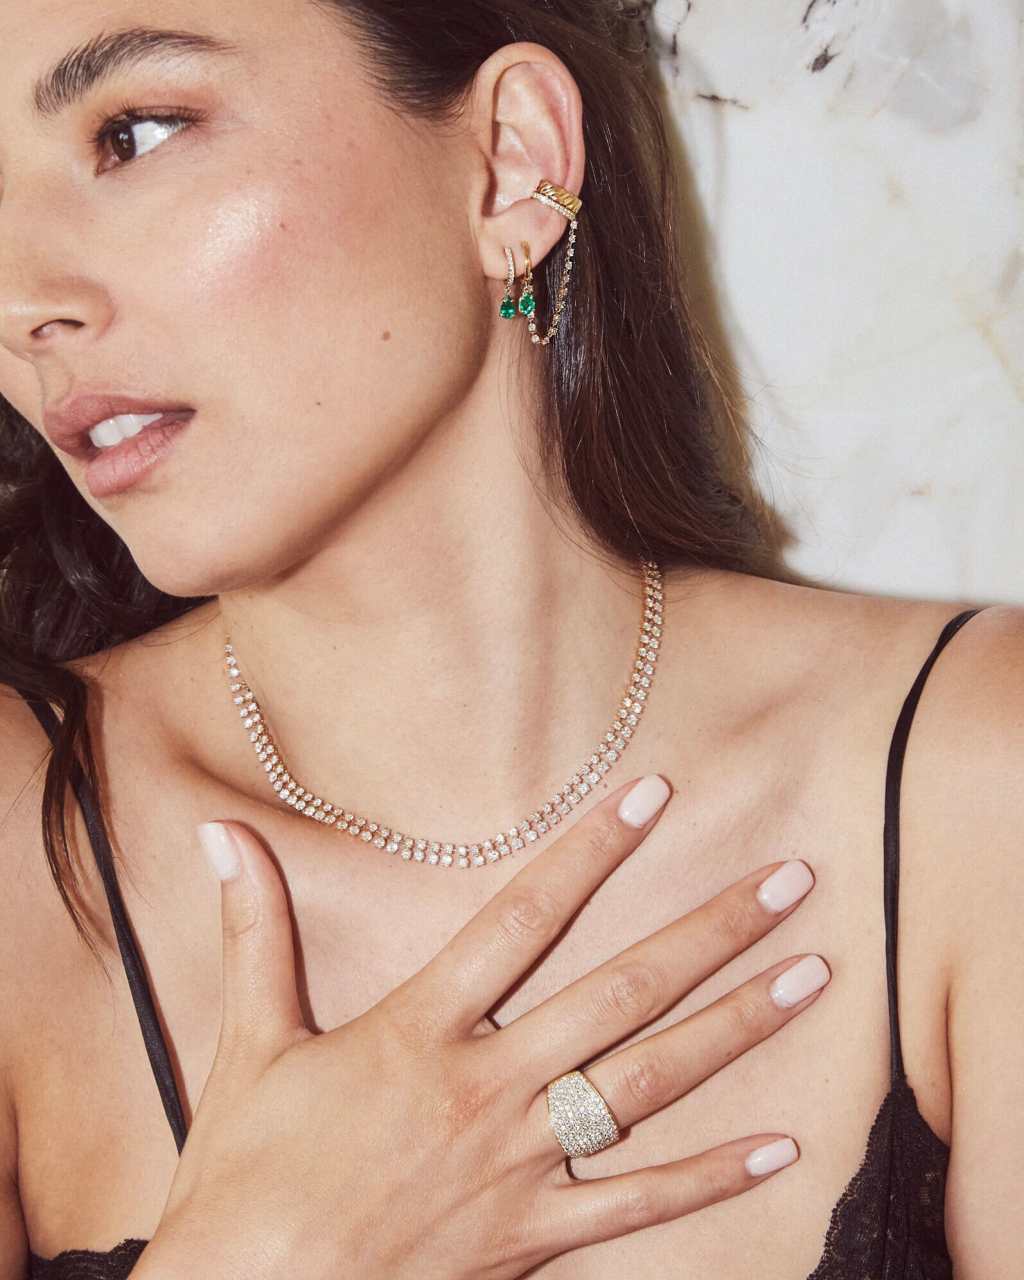 Model wearing diamond necklace, ring and earring by Asian American designer Anita Ko